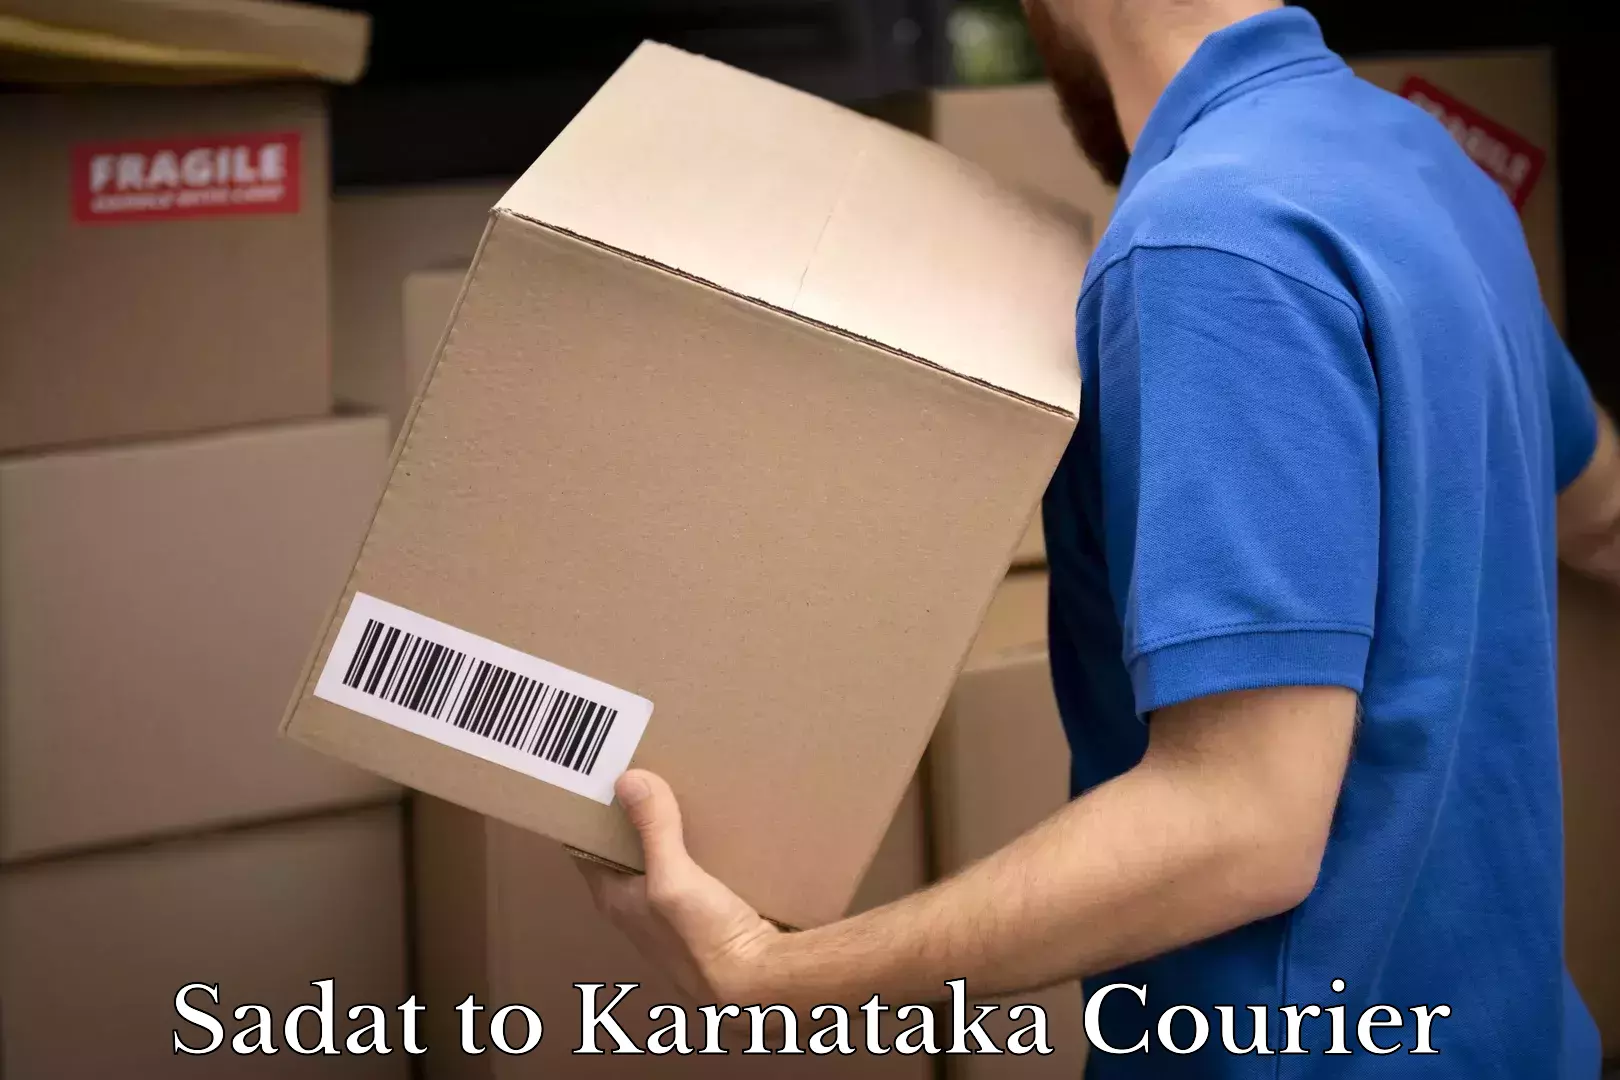 Global logistics network Sadat to Karnataka